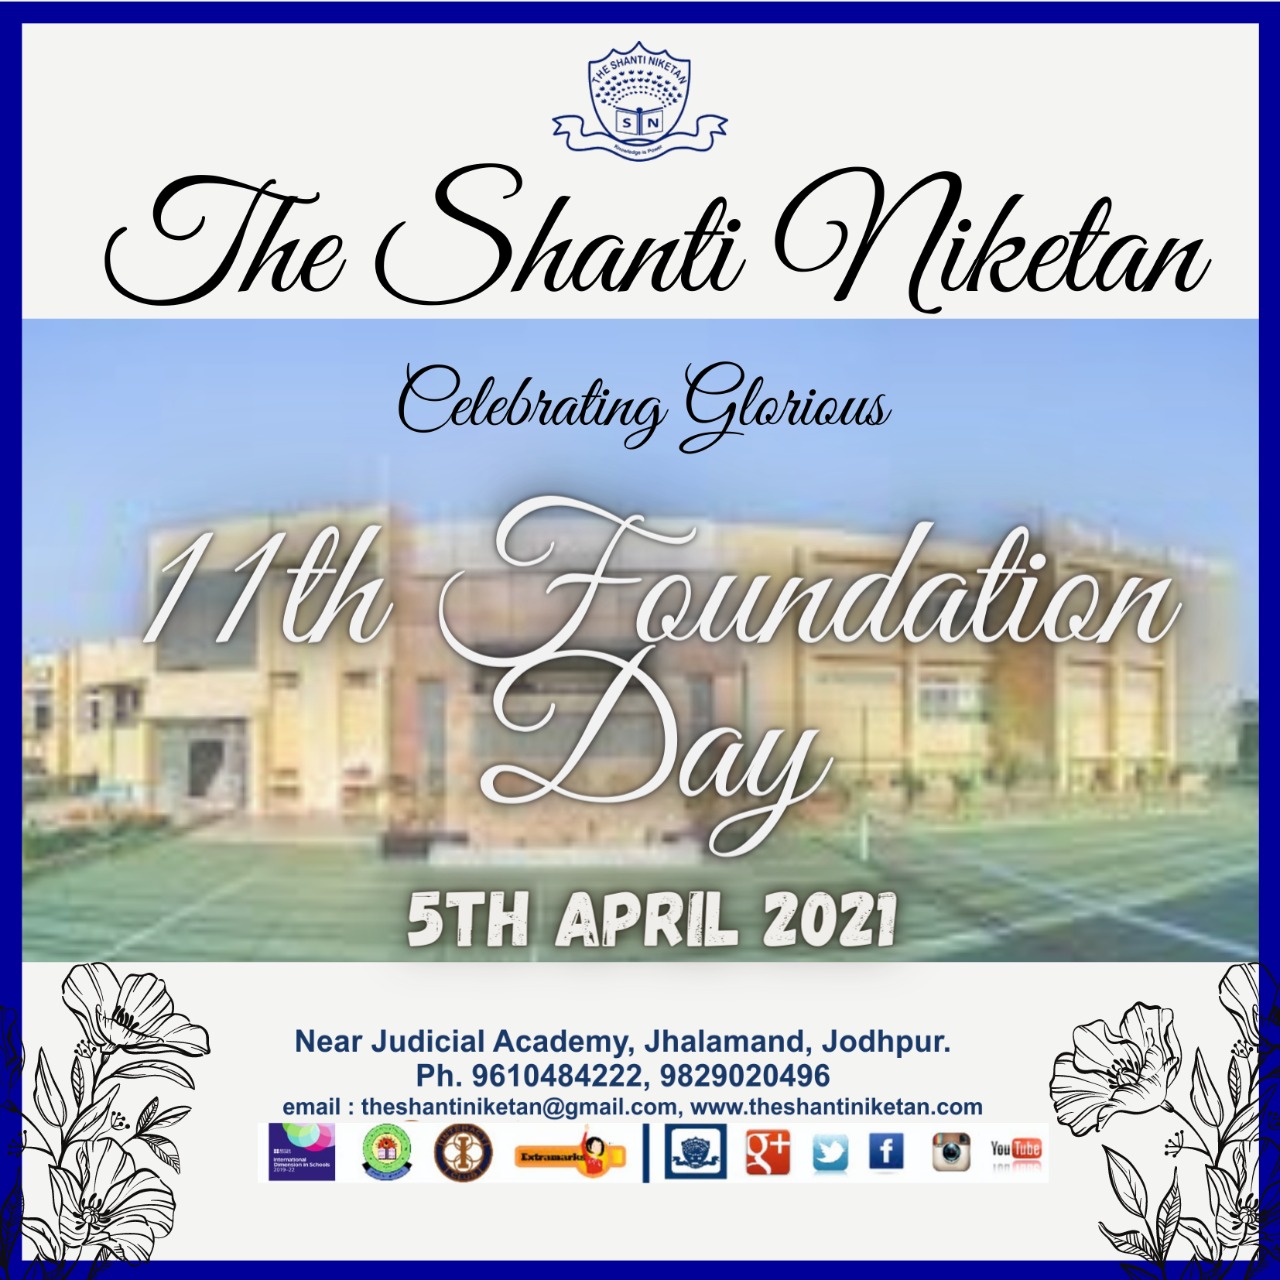 11th Foundation Day